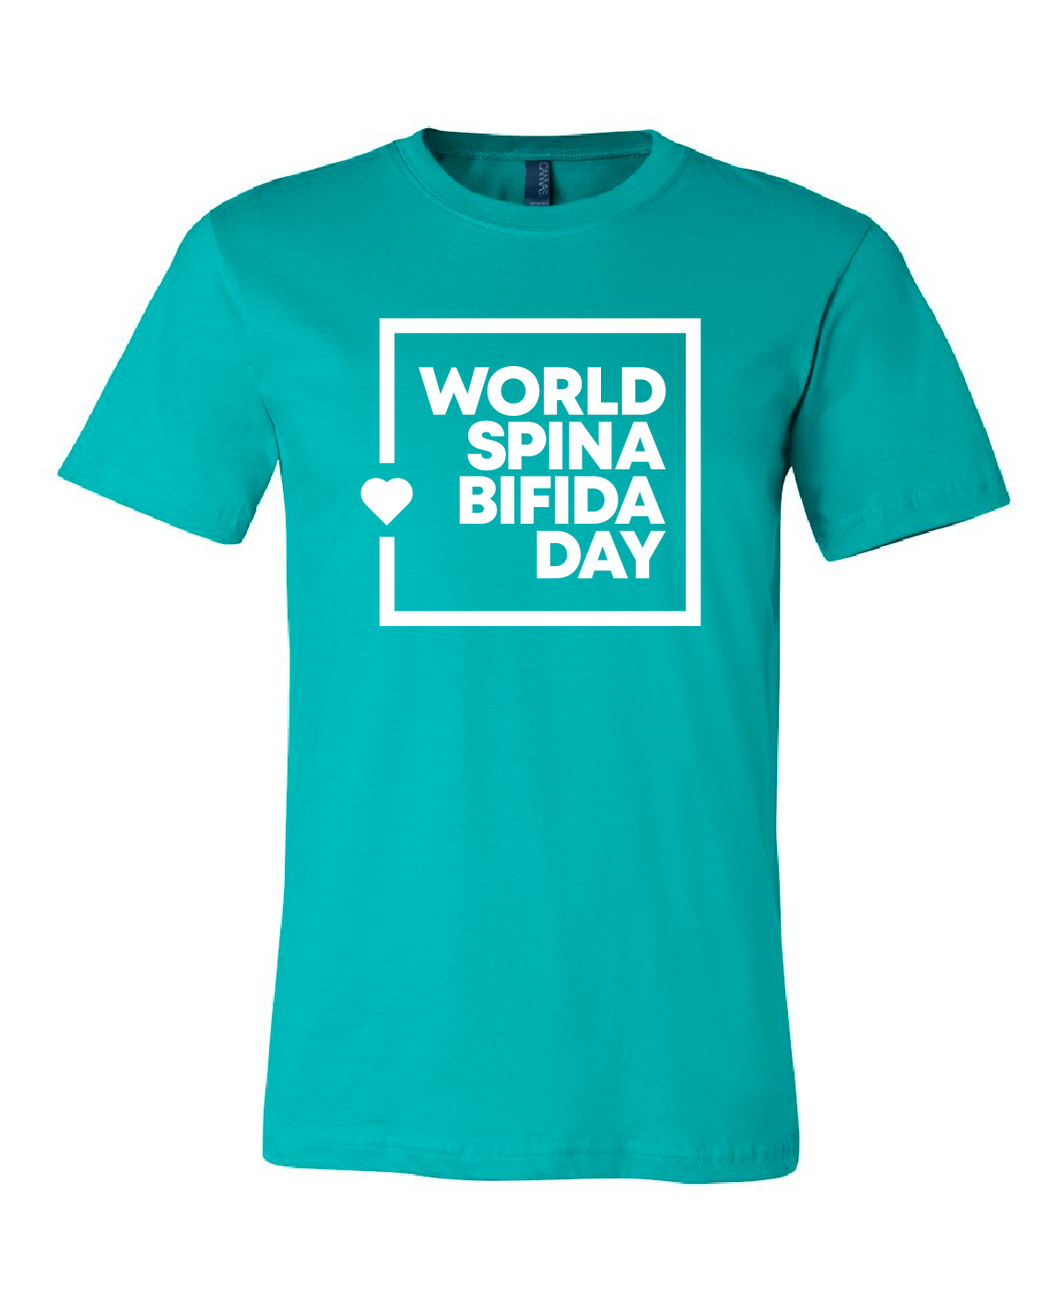 World Spina Bifida Day Teal T-Shirt - ADULT